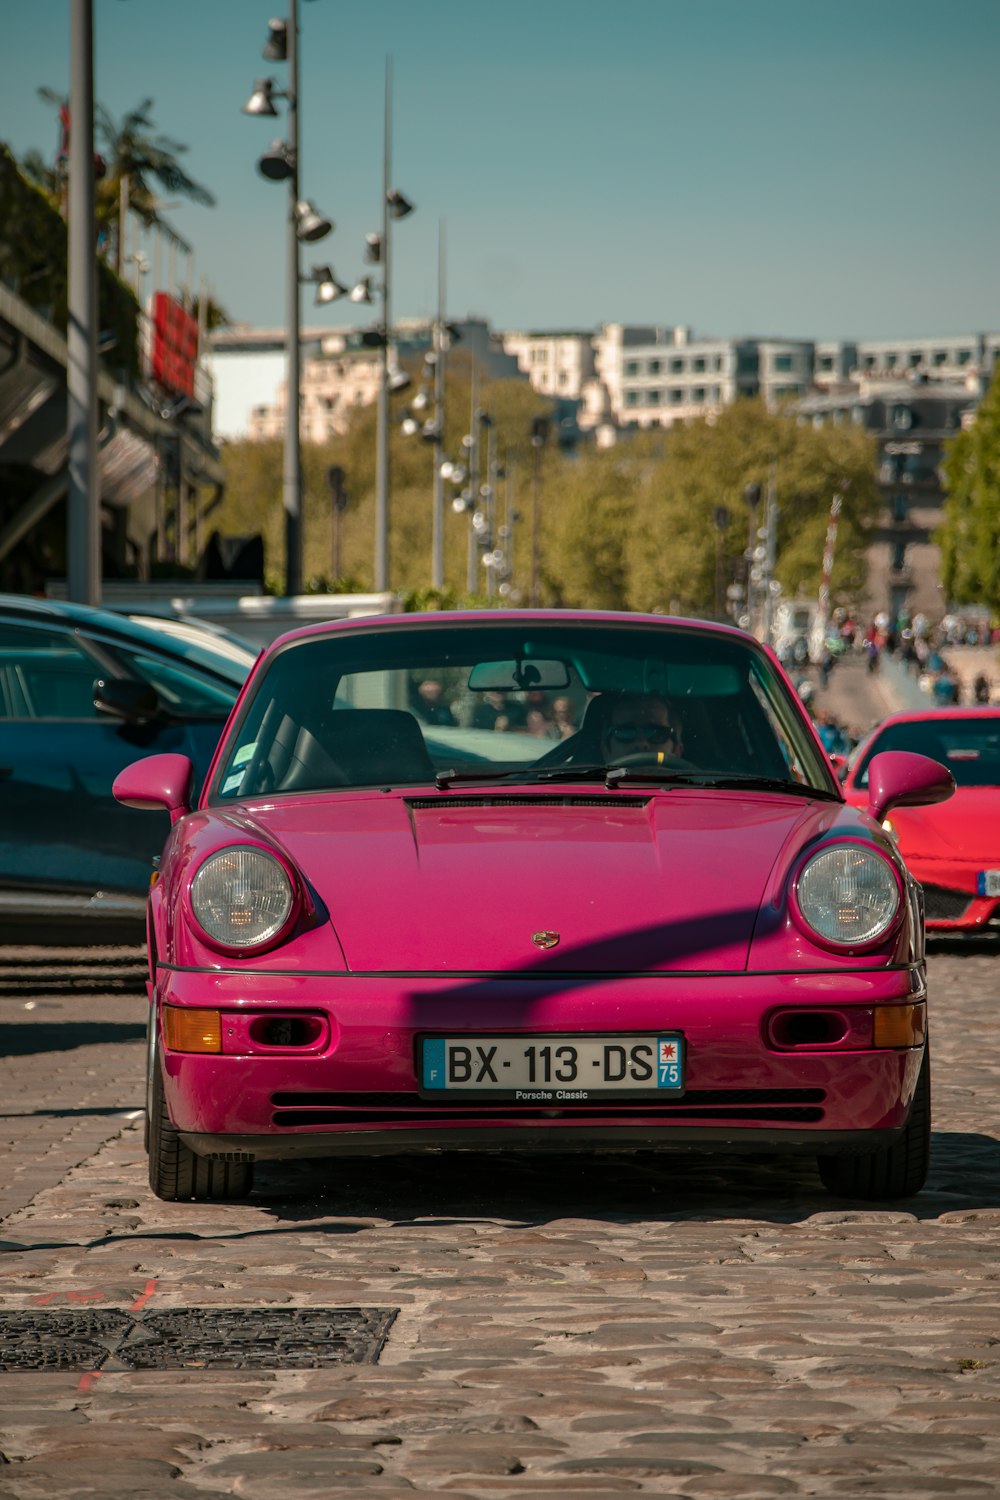 a pink car on a street